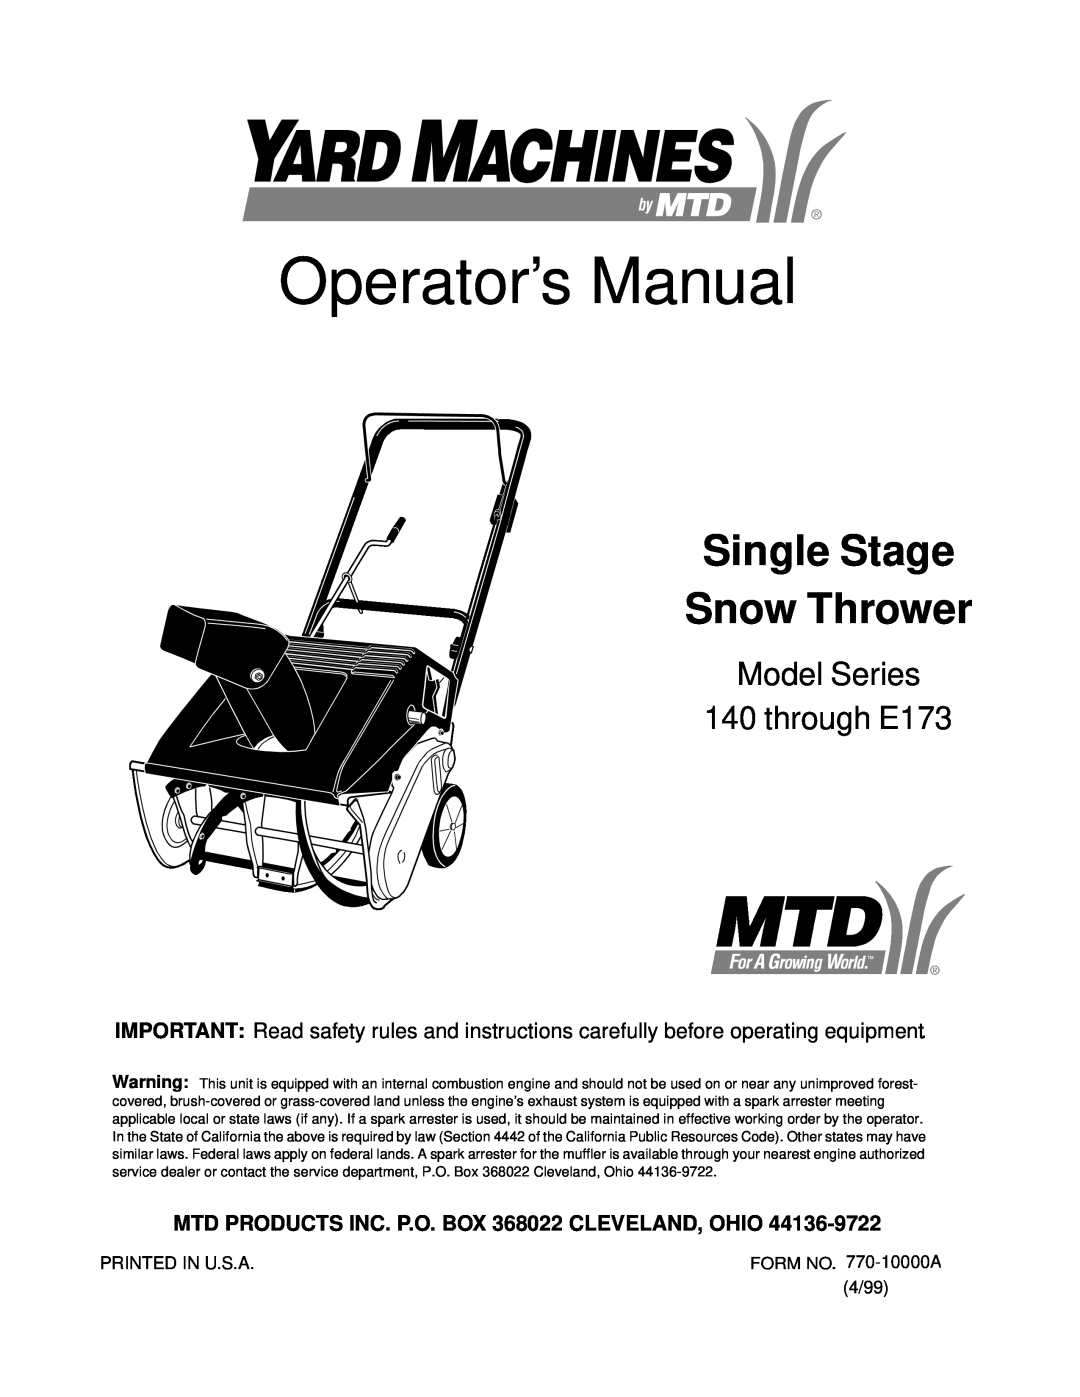 MTD manual Model Series 140 through E173, Operator’s Manual, Single Stage Snow Thrower 